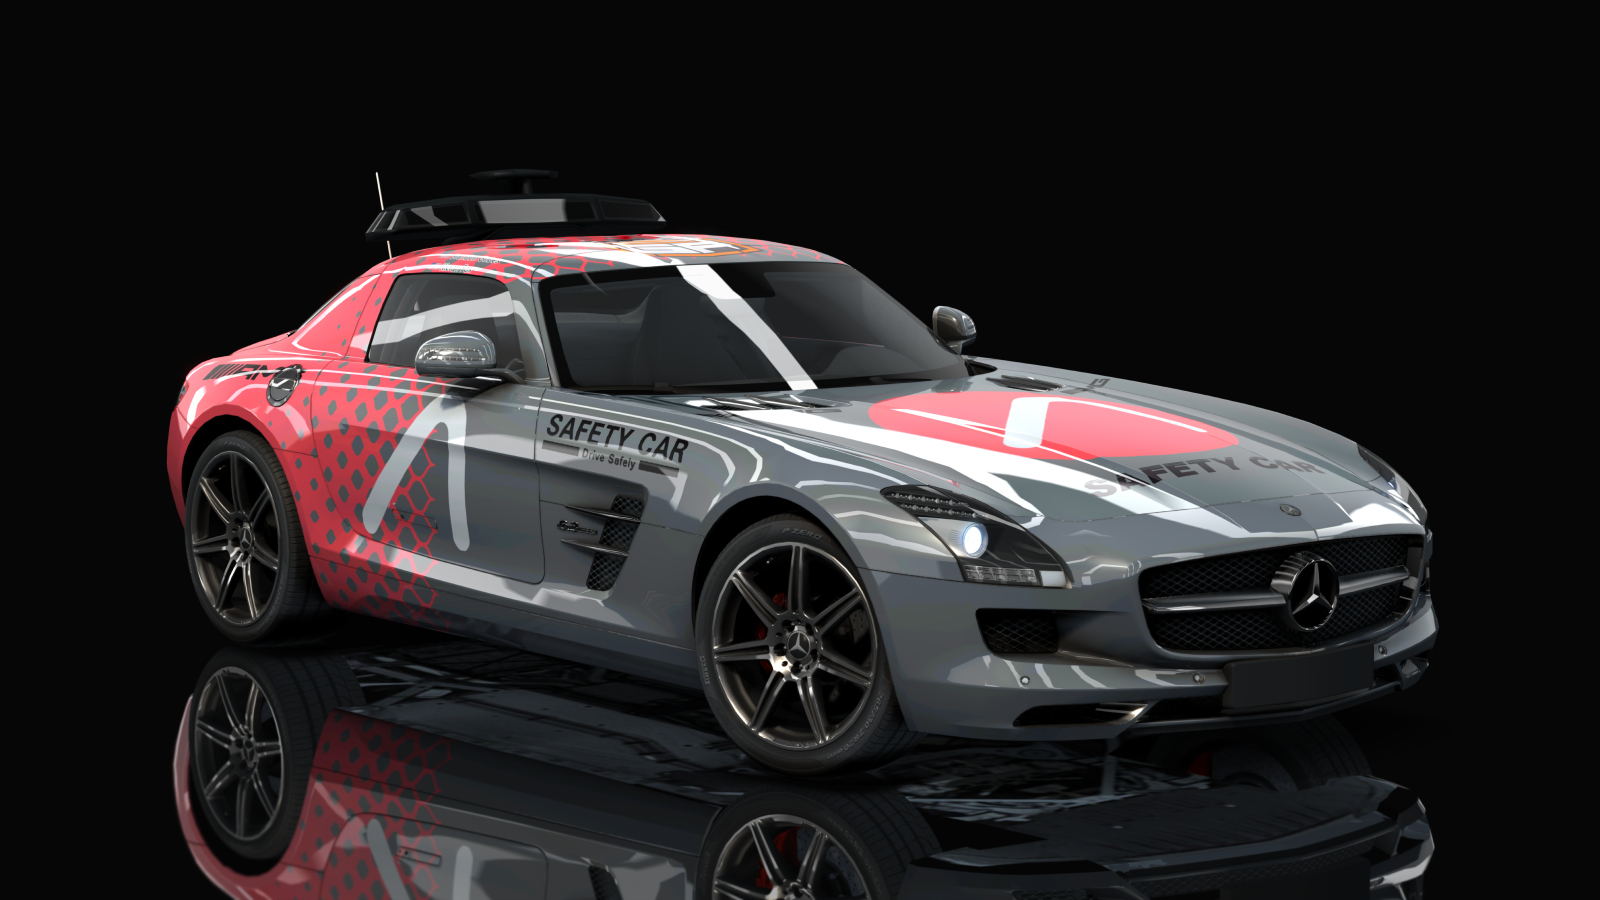 Mercedes SLS Safety Car Preview Image